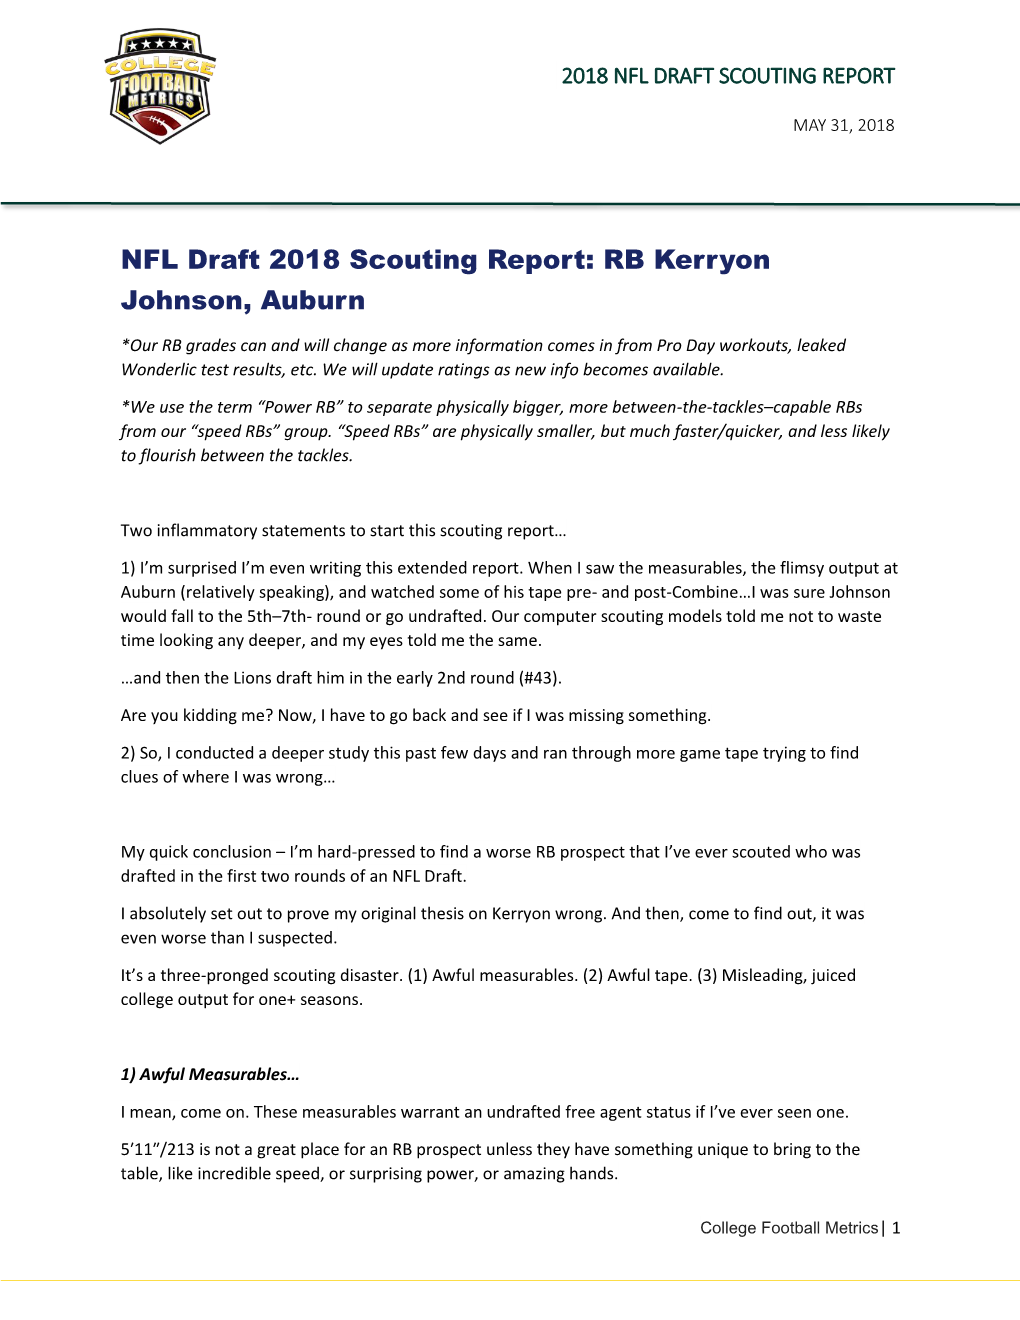 NFL Draft 2018 Scouting Report: RB Kerryon Johnson, Auburn